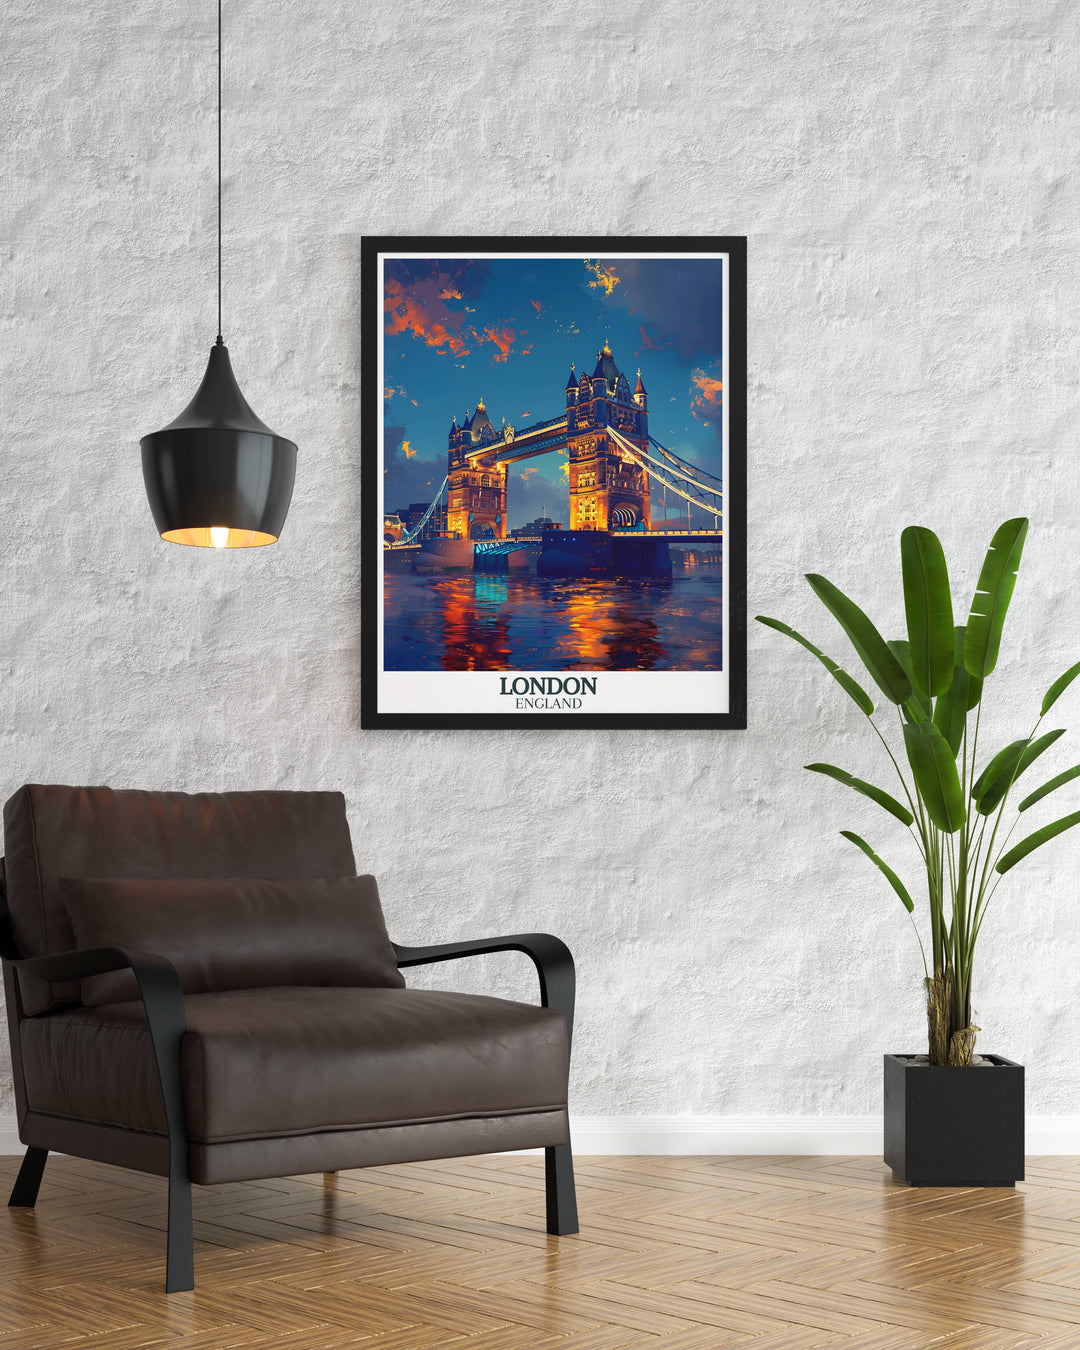 Vintage travel poster of Tower Bridge, styled with retro elements to evoke nostalgic feelings of old London.